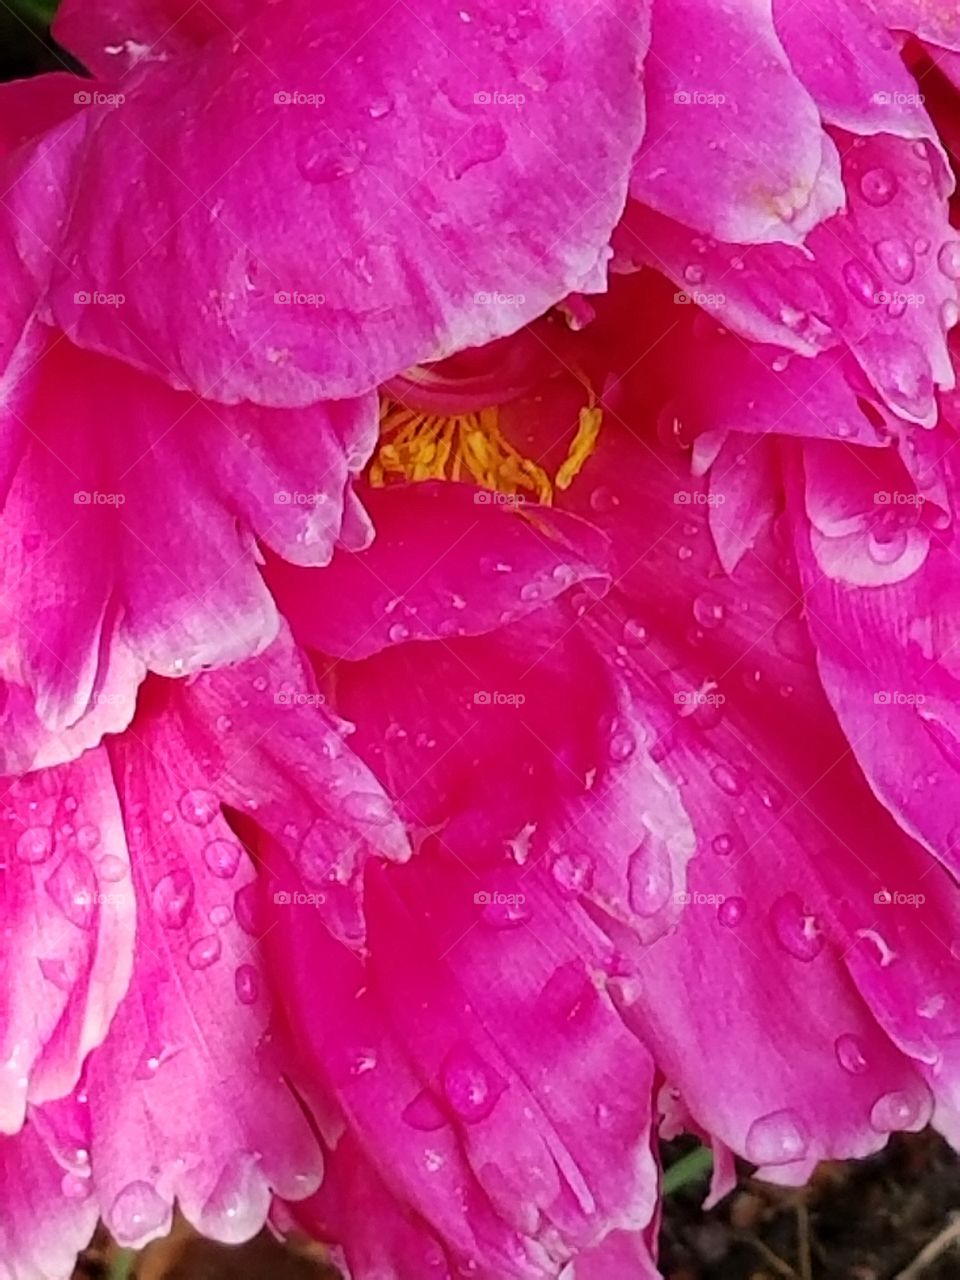 pink flower close-up  - background texture